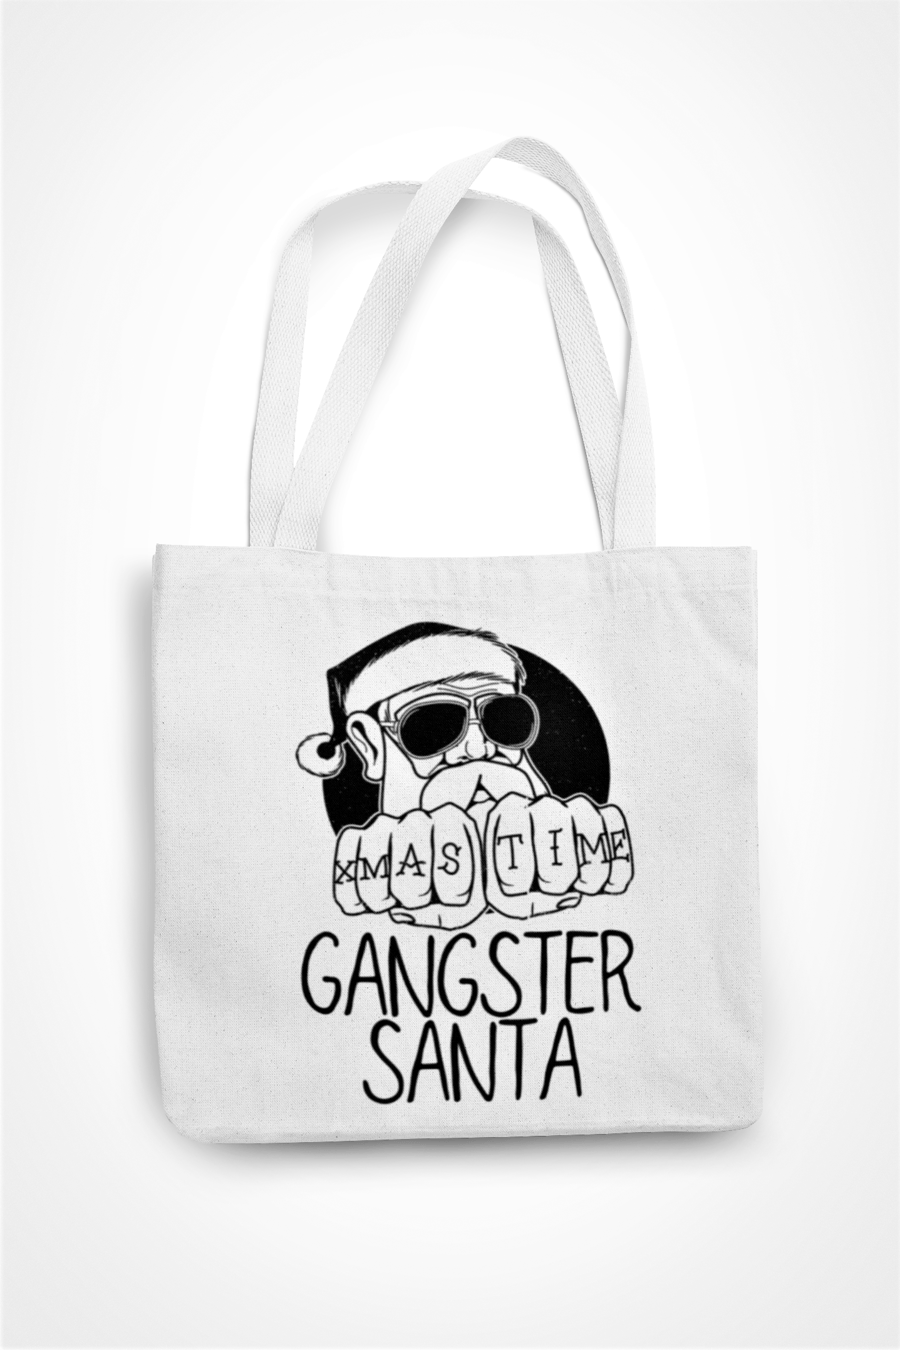 Gangster Santa  - Novelty Funny Christmas Tote Bag - Shopper Bag xmas Gift